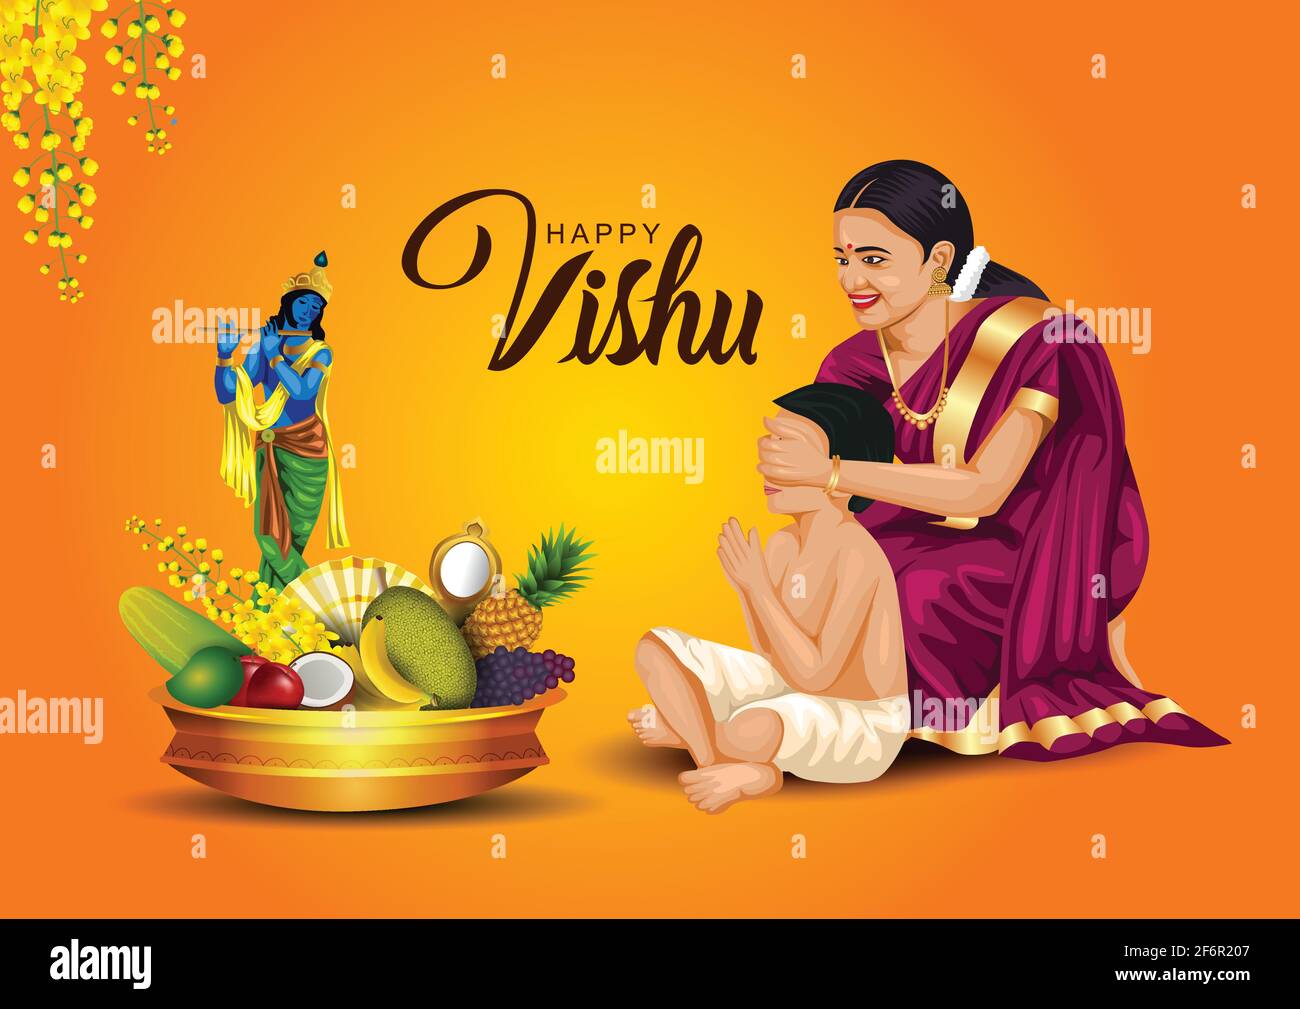 Happy Vishu greetings. April 14 Kerala festival with Vishu Kani, vishu flower Fruits and vegetables in a bronze vessel. vector illustration design (Ma Stock Vector